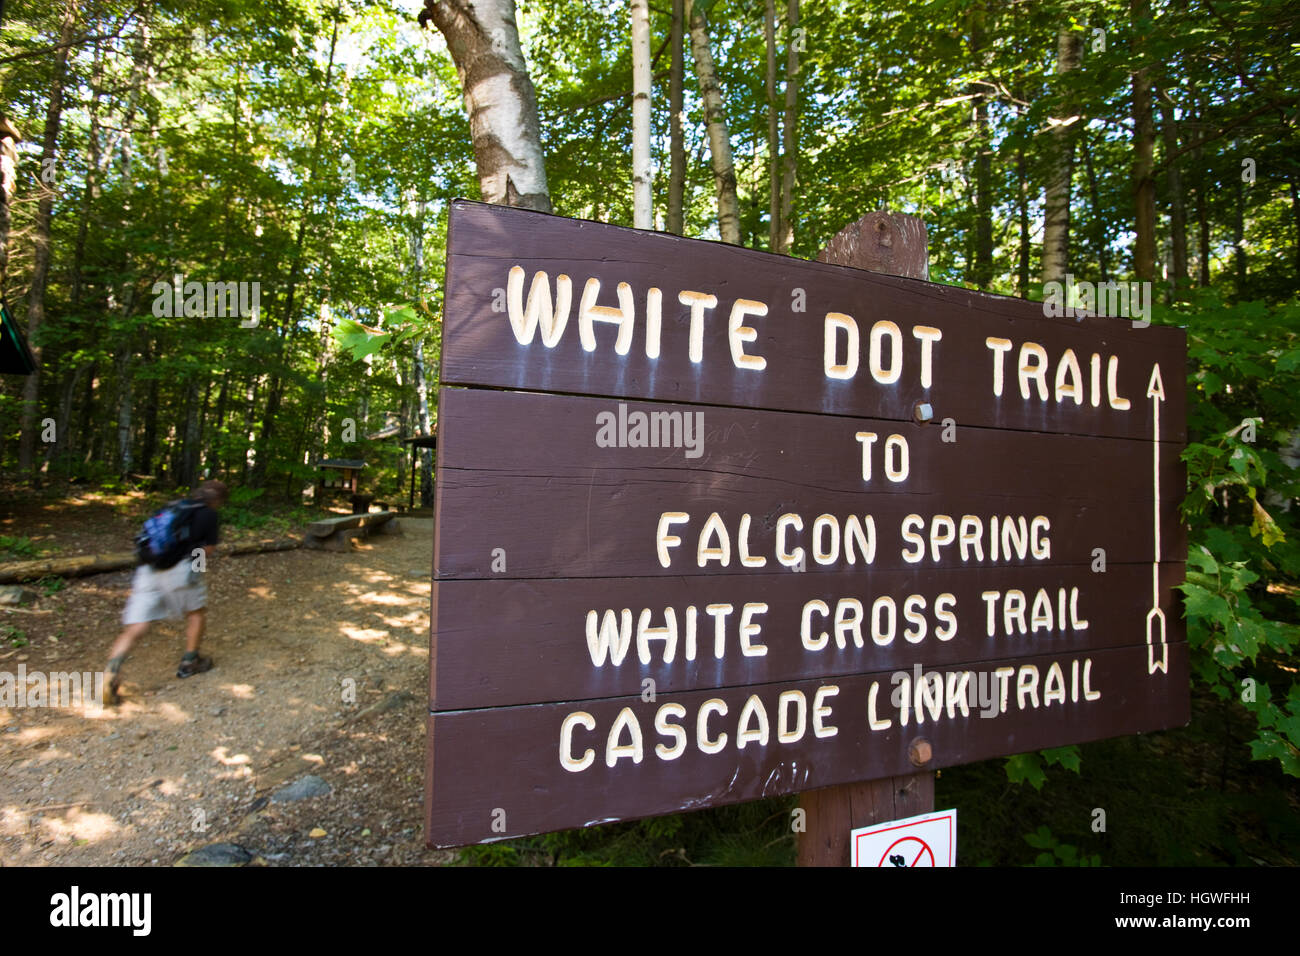 Der Beginn der White-Dot-Trail in New Hampshire Monadnock State Park. Stockfoto